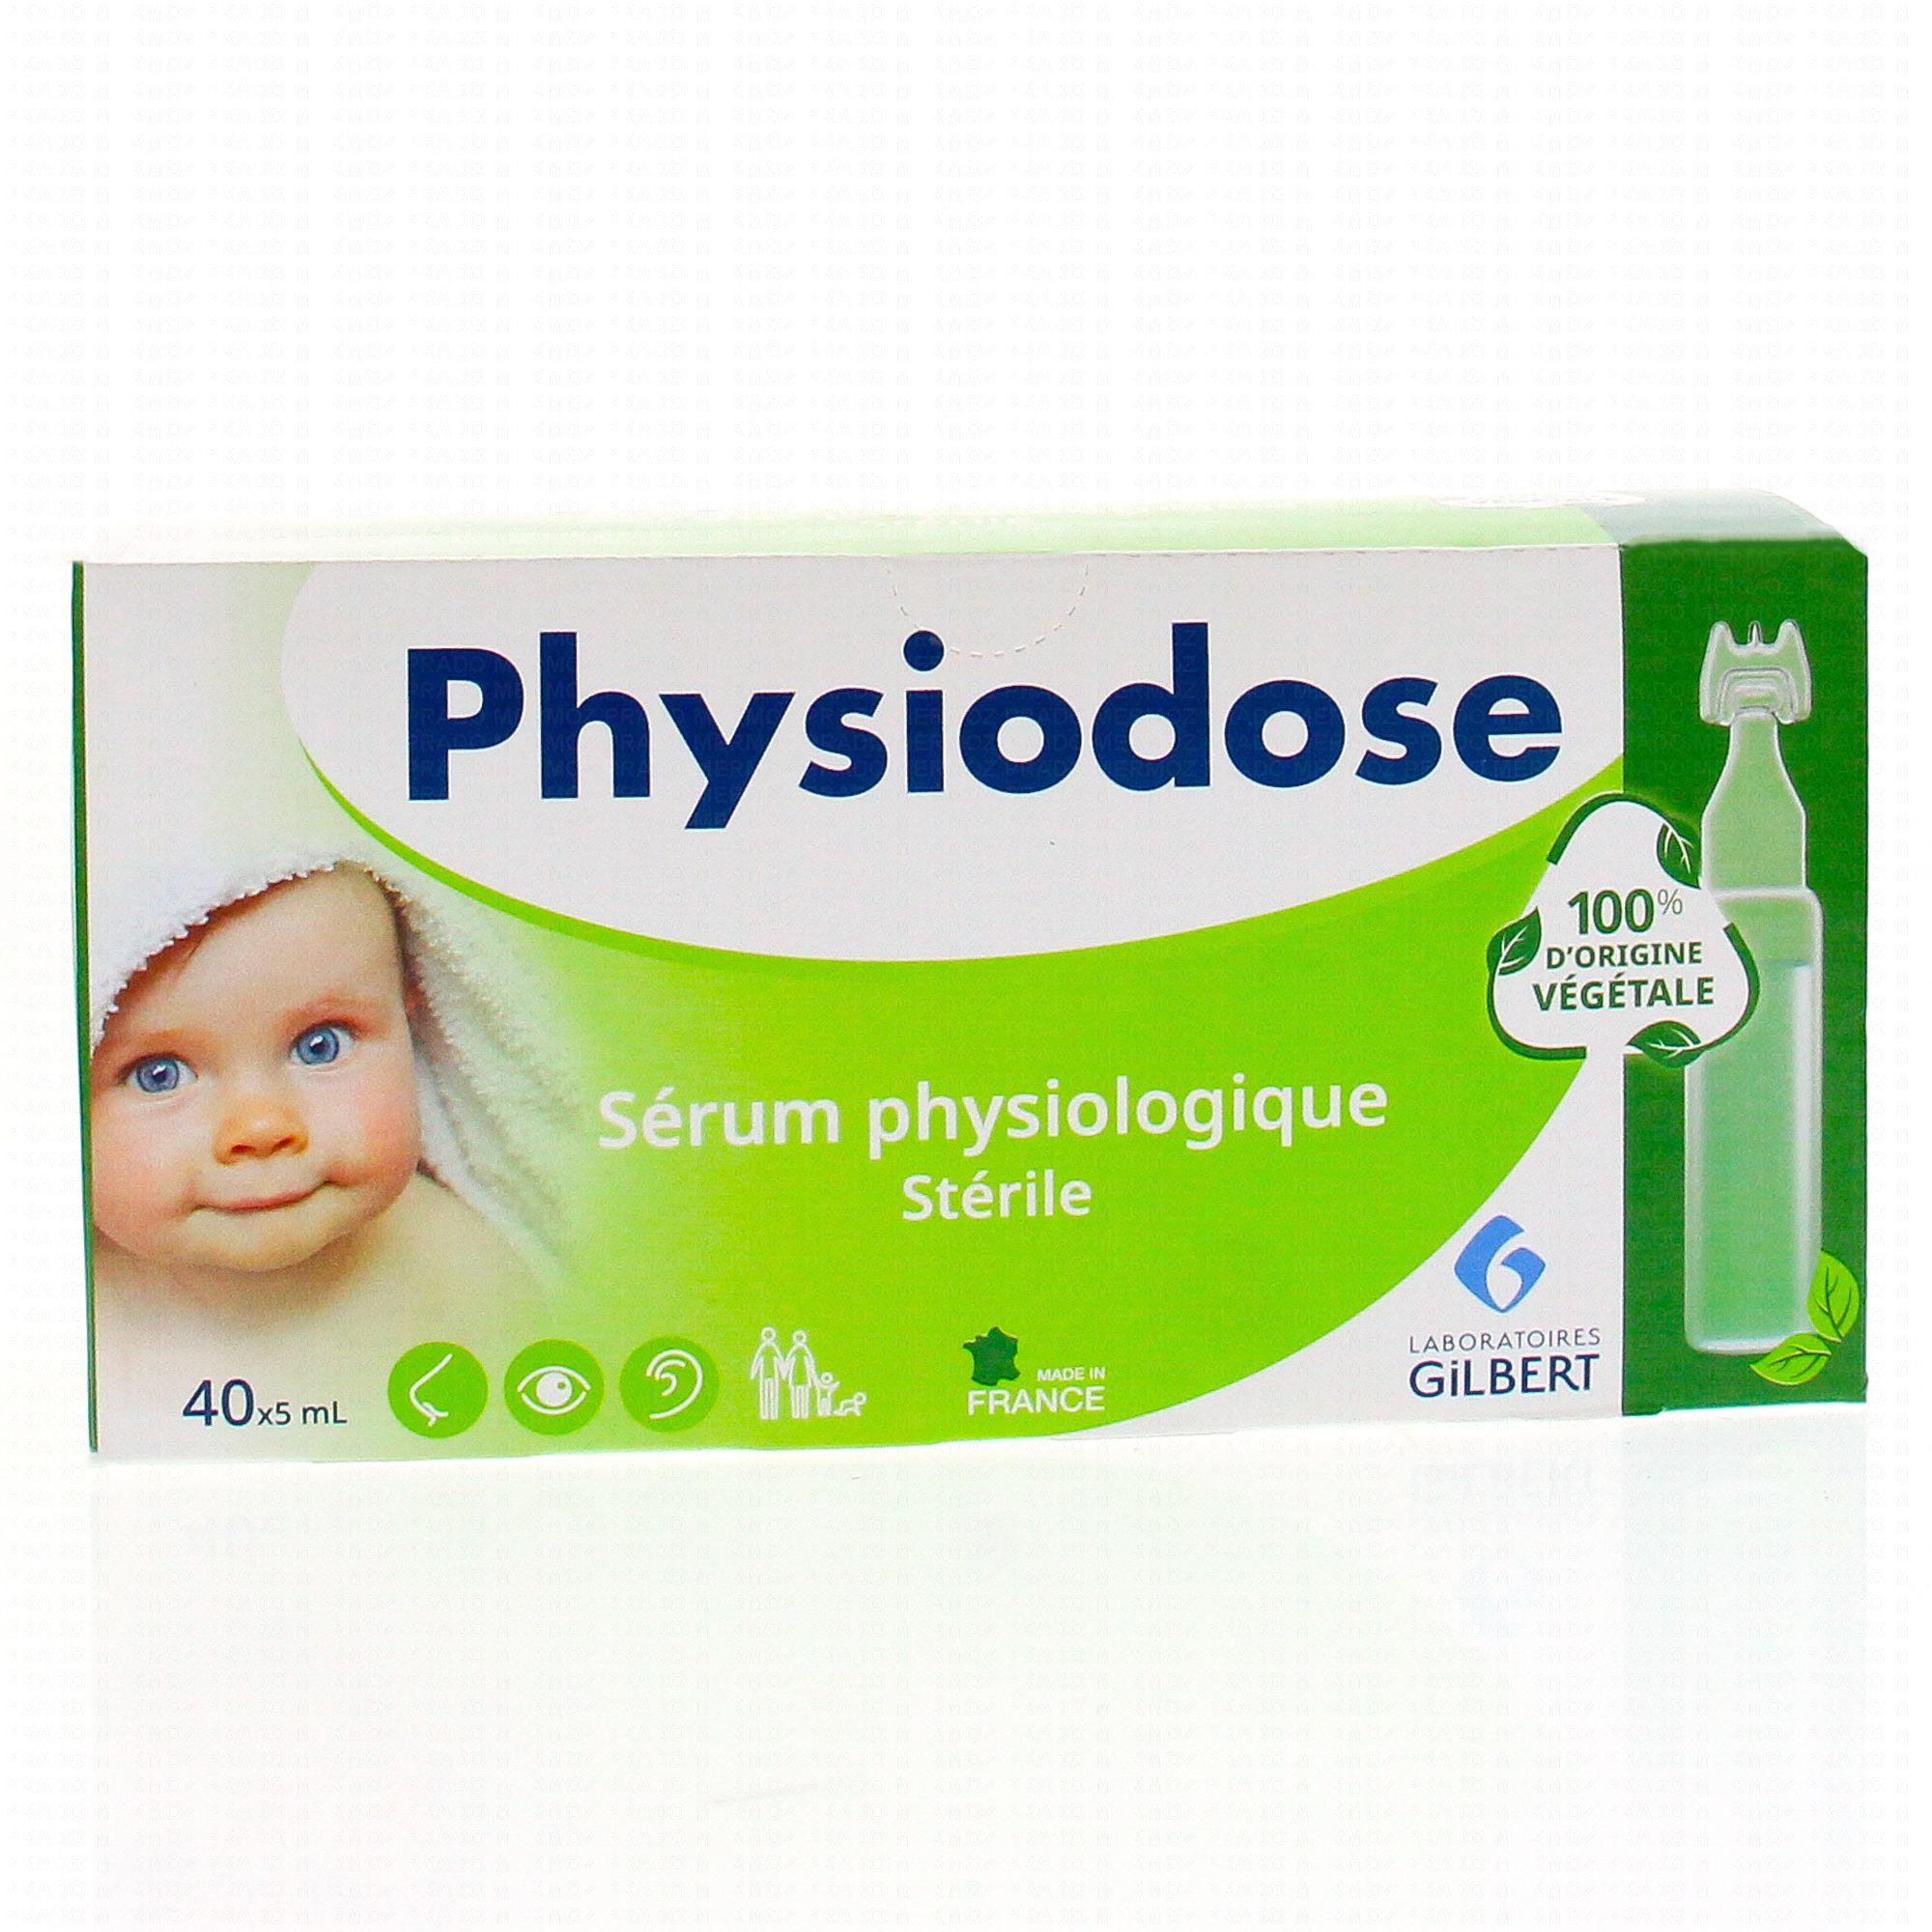 Pharmamed - Serum physiologique - 1L